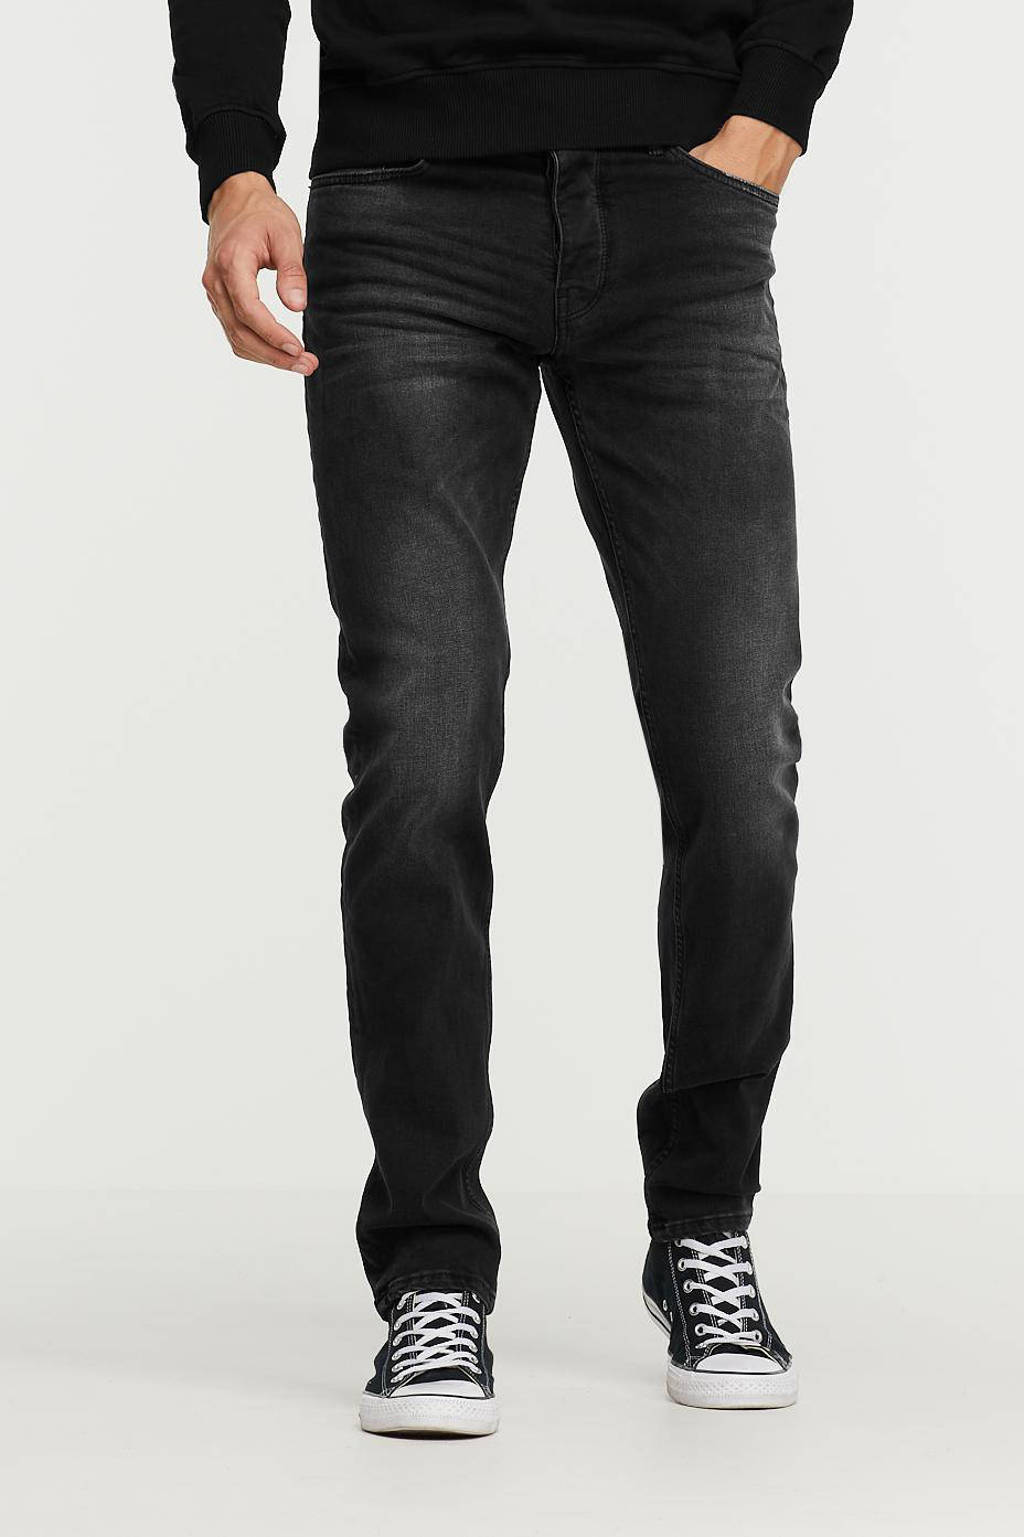 Purewhite slim fit jeans The Stan W0101 denim dark grey